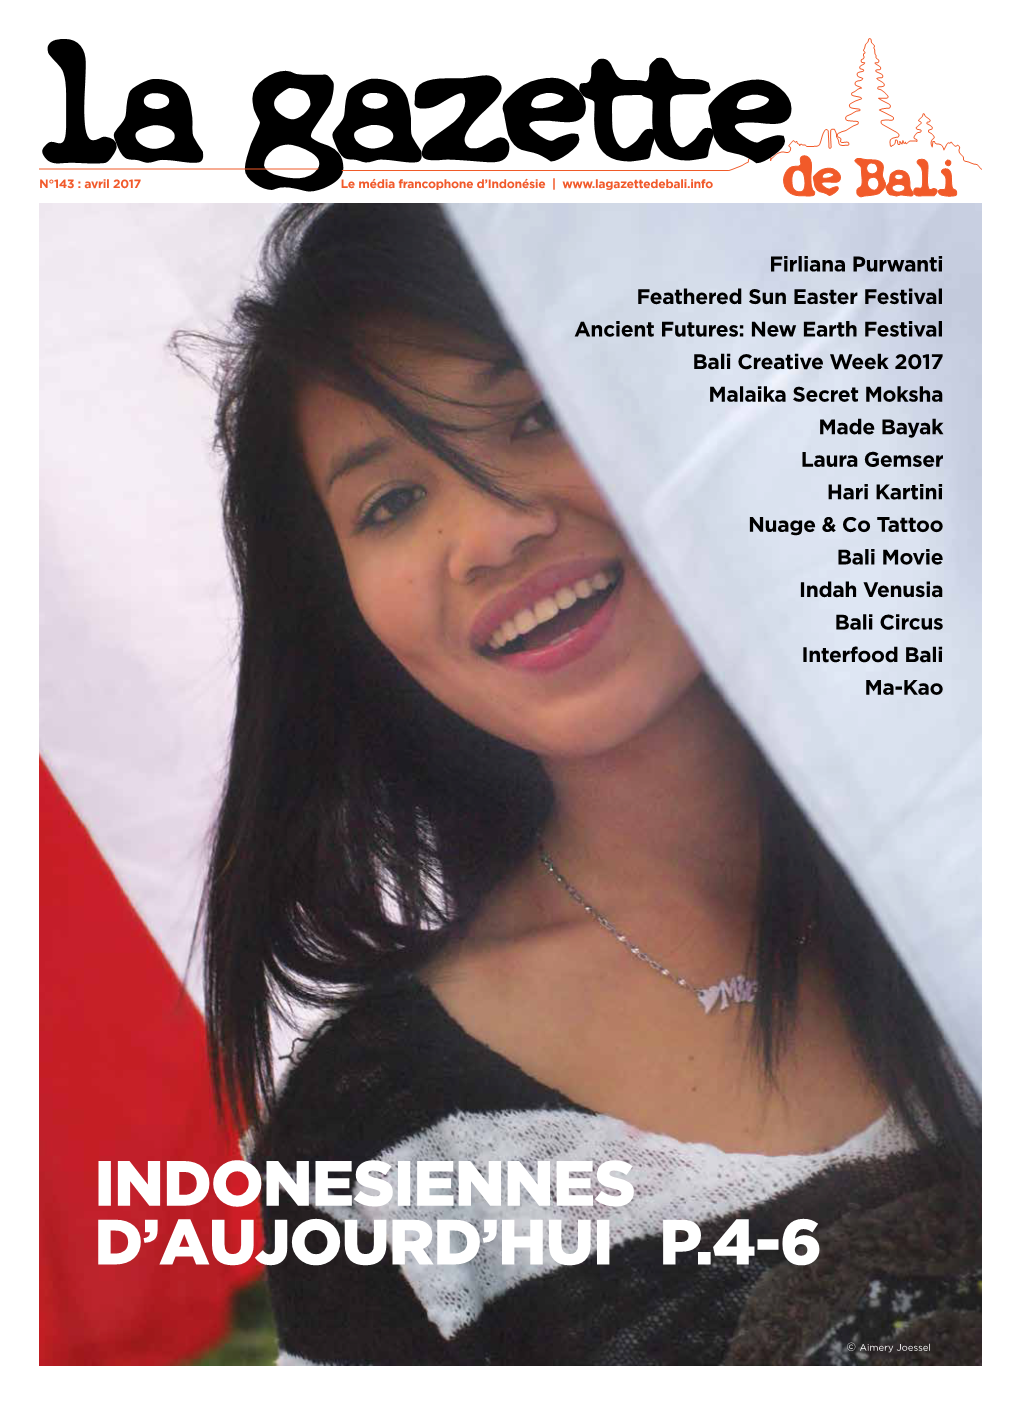 Indonesiennes D'aujourd'hui P.4-6